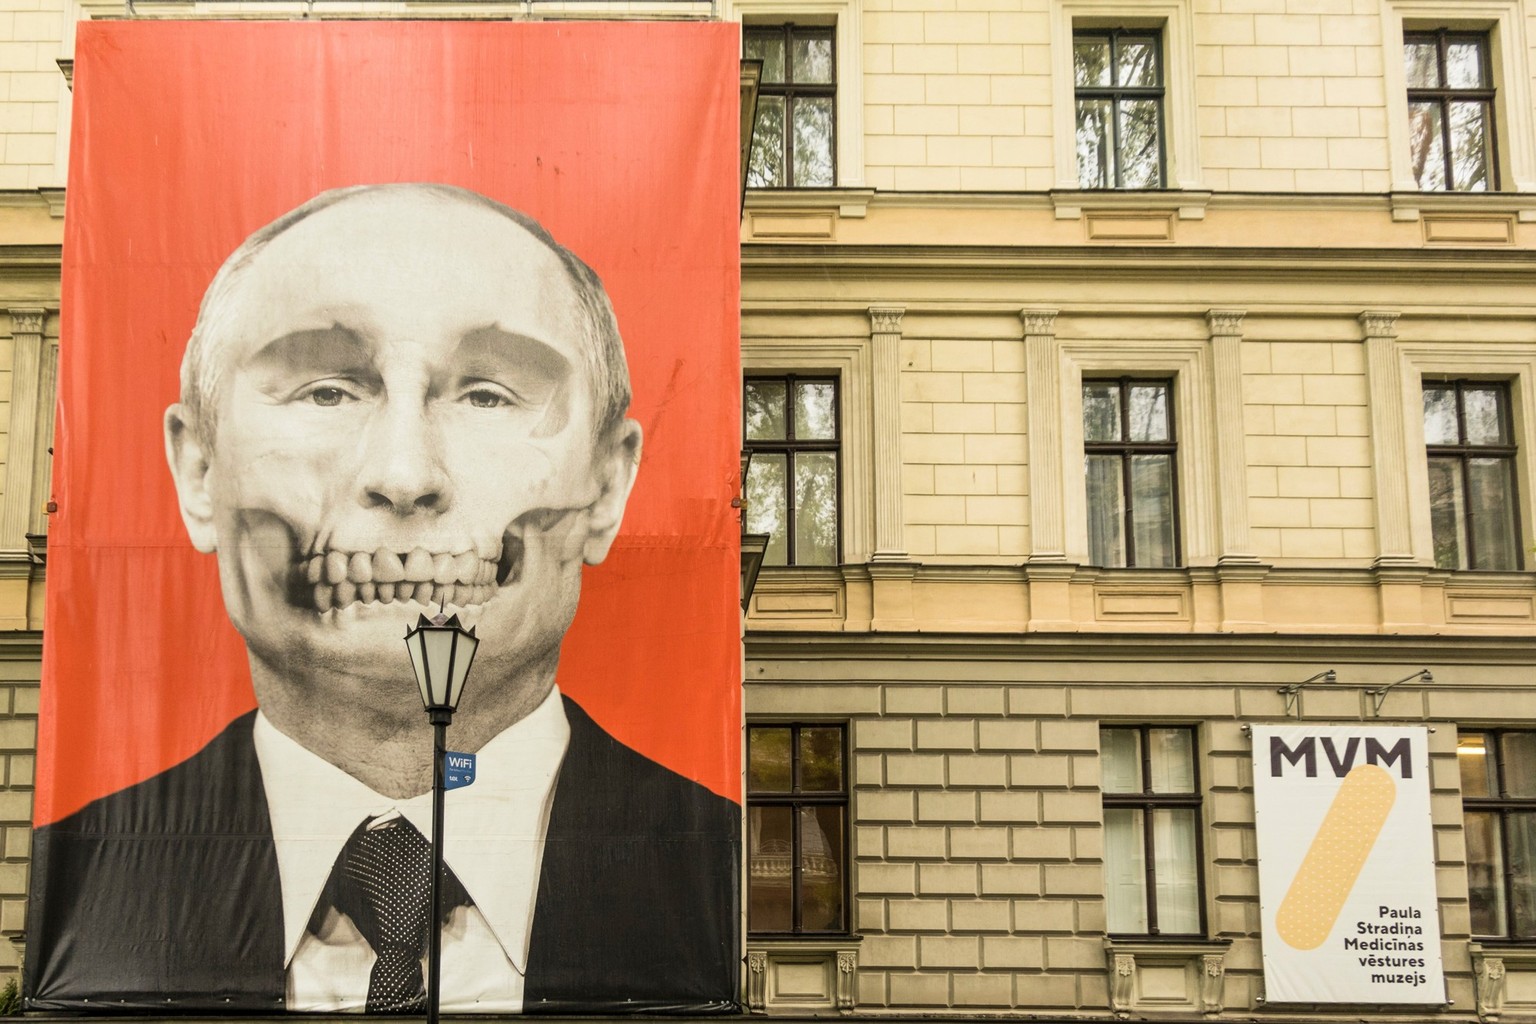 Riga, Latvia, A caricature of Vladimir Putin across from the Russian embassy in Riga.